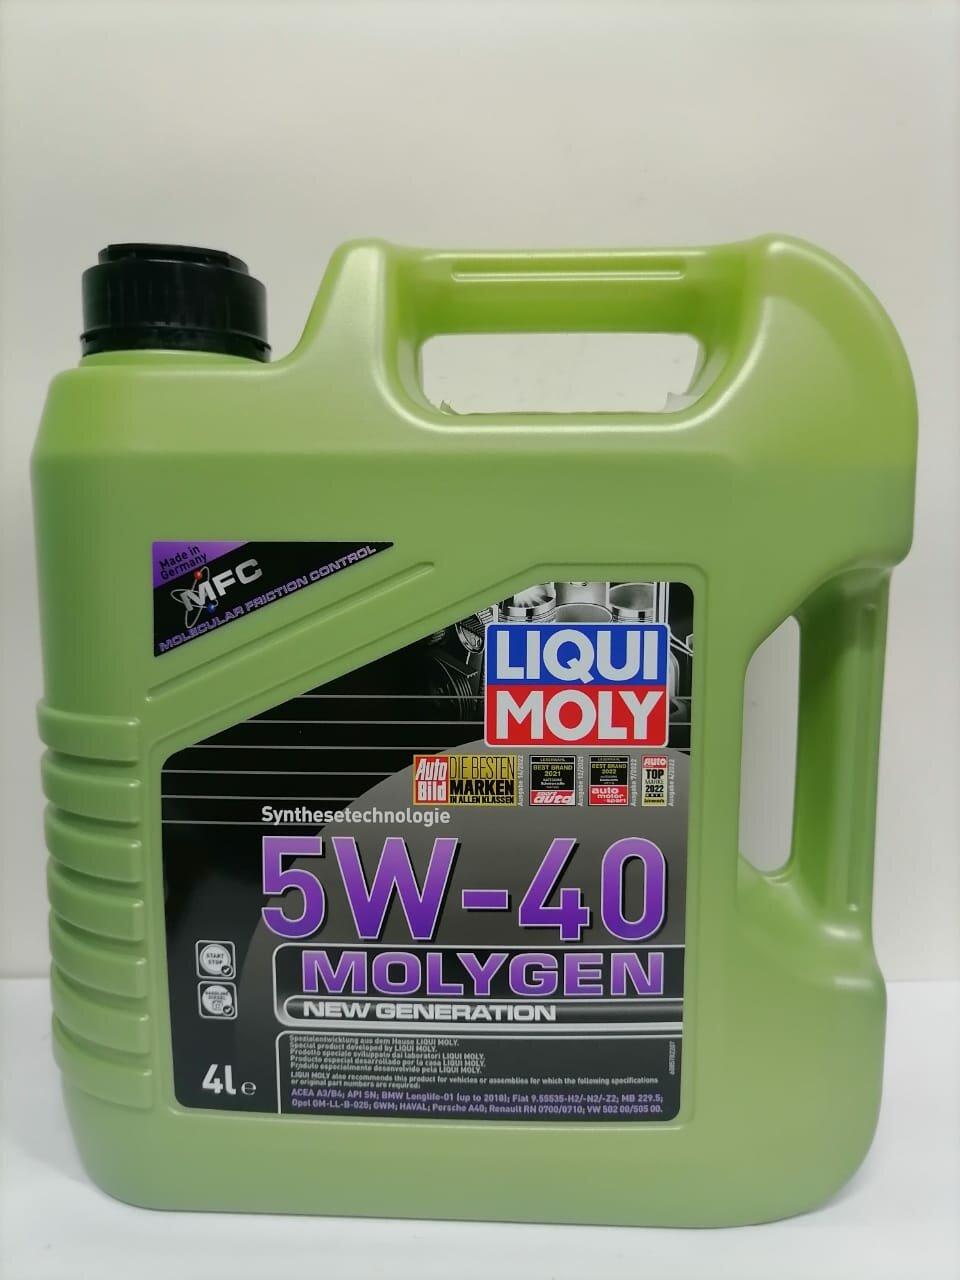 HC-синтетическое моторное масло LIQUI MOLY Molygen New Generation 5W-40